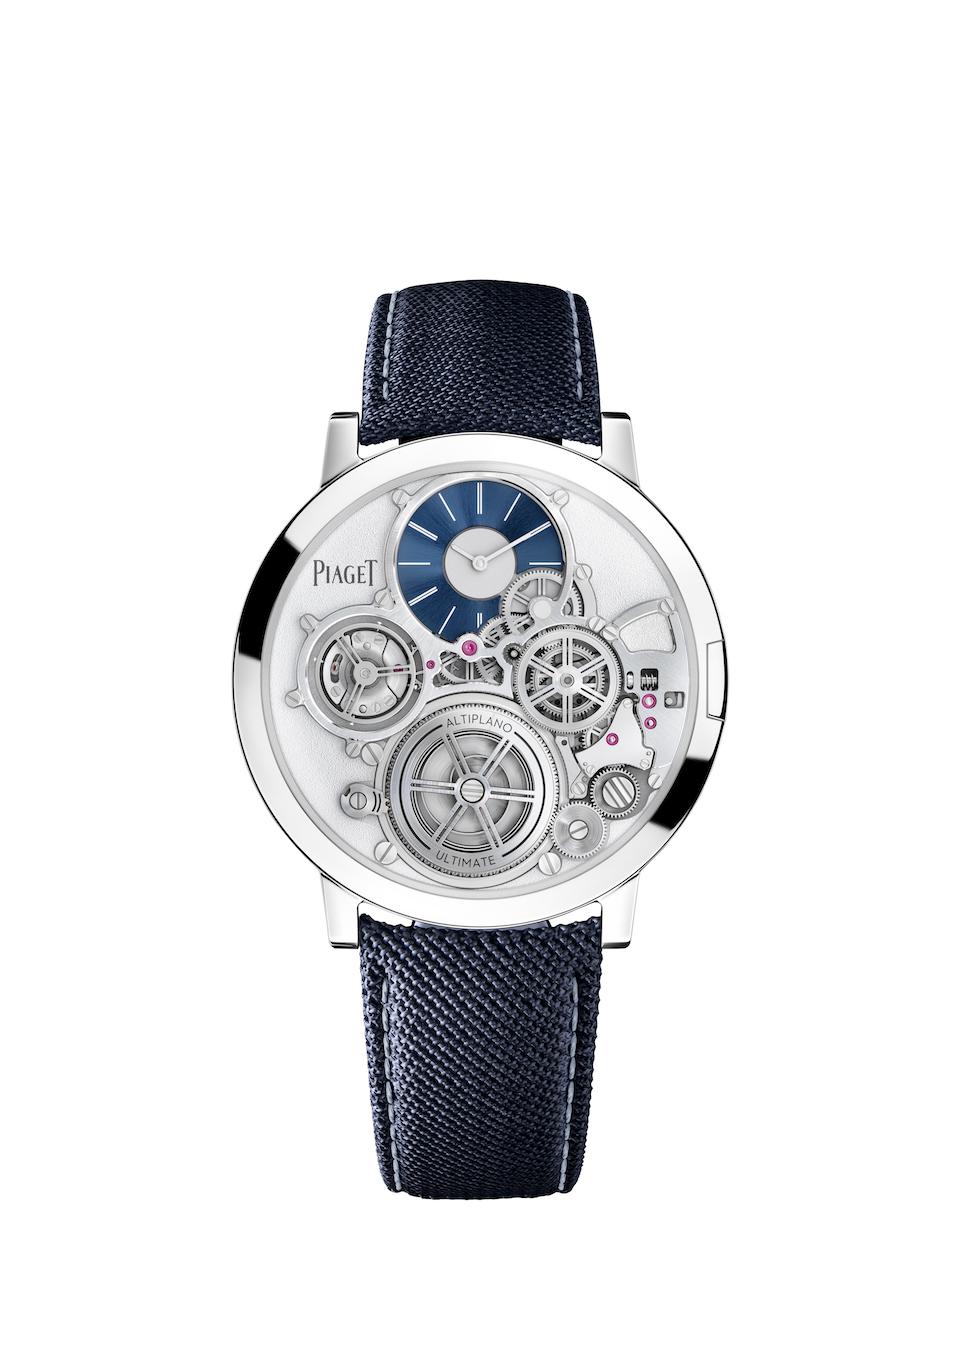 PiagetAltiplano Ultimate Concept watch.